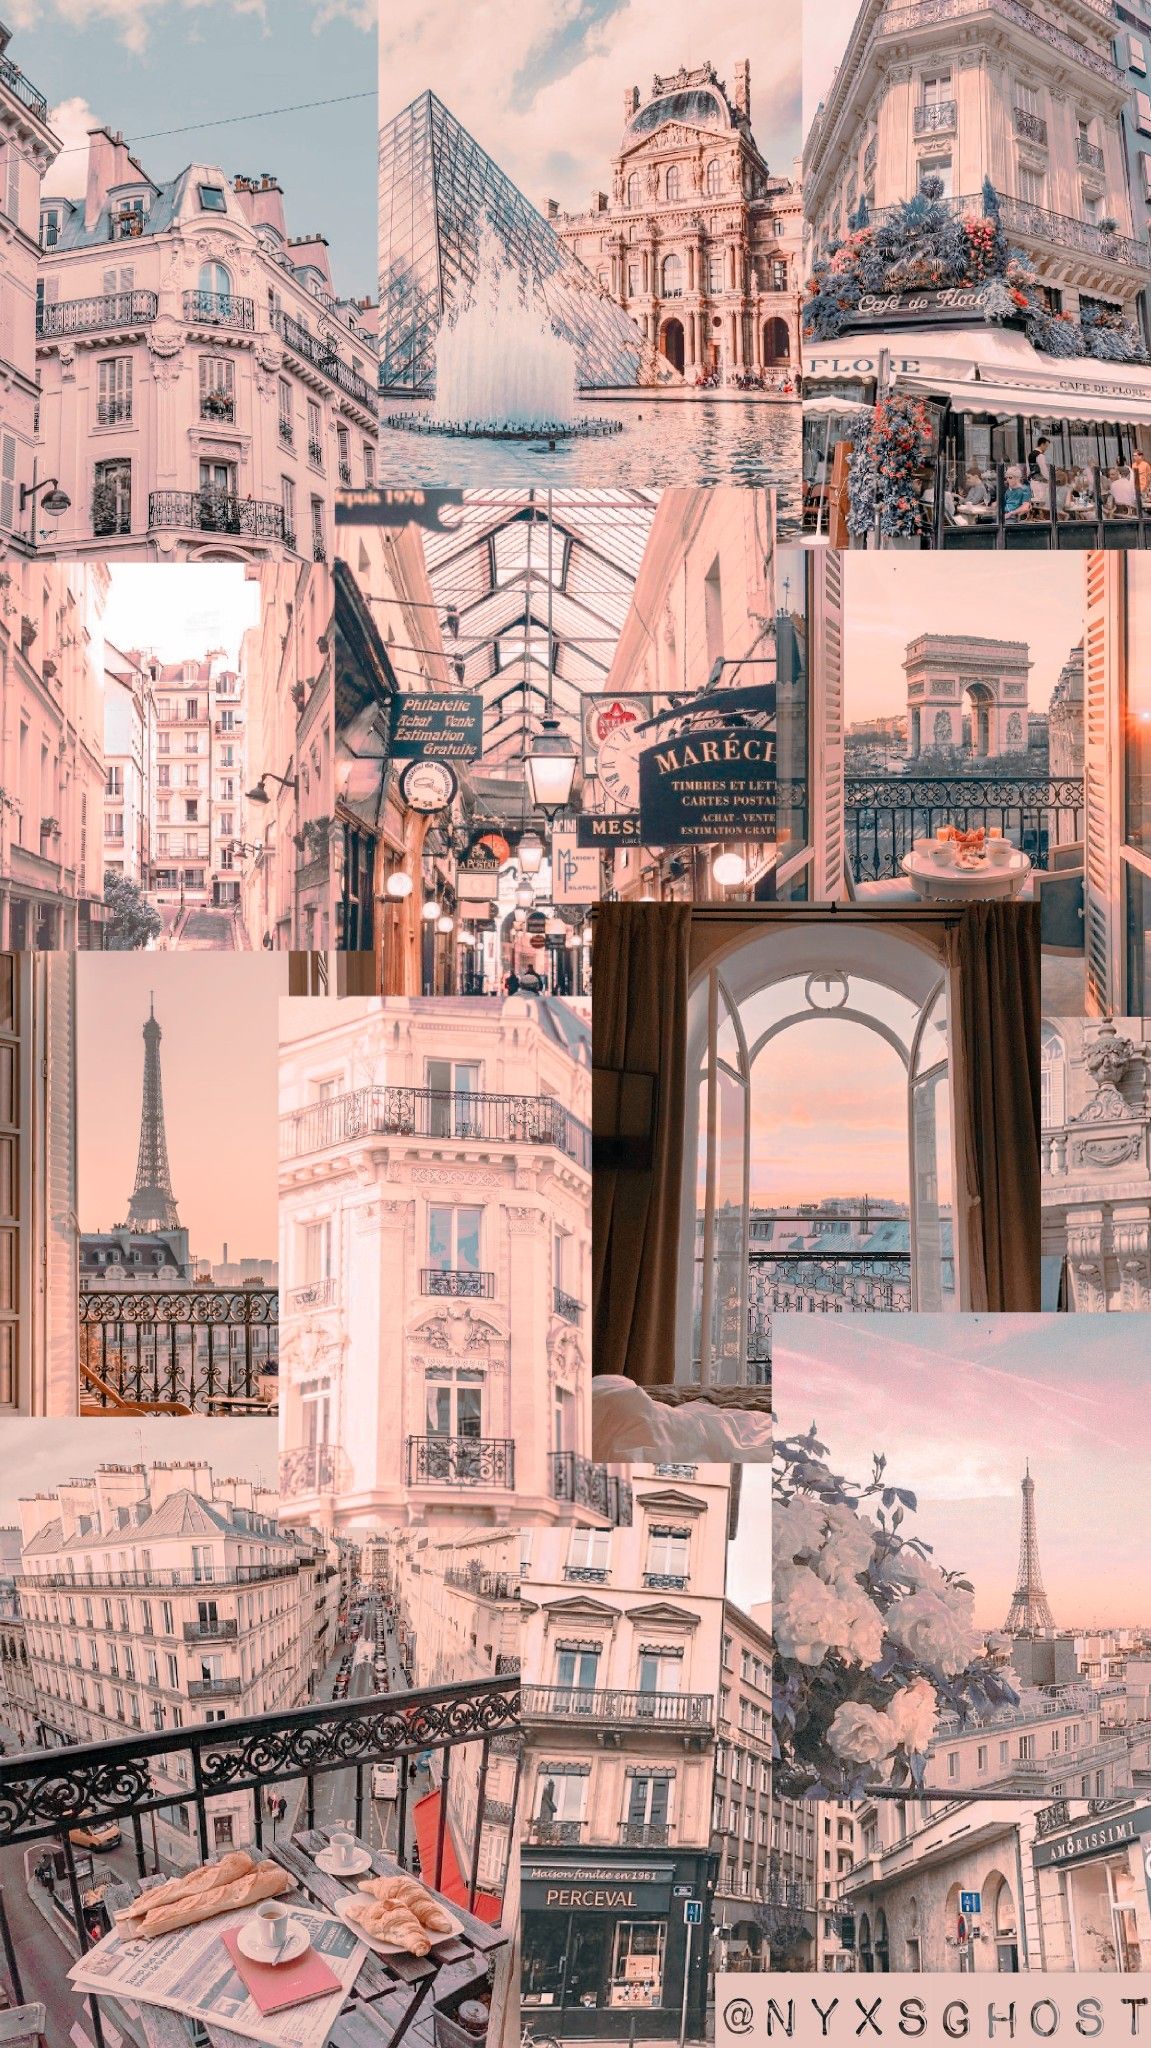 City Aesthetic Wallpaper ideas. city aesthetic, aesthetic wallpaper, travel aesthetic